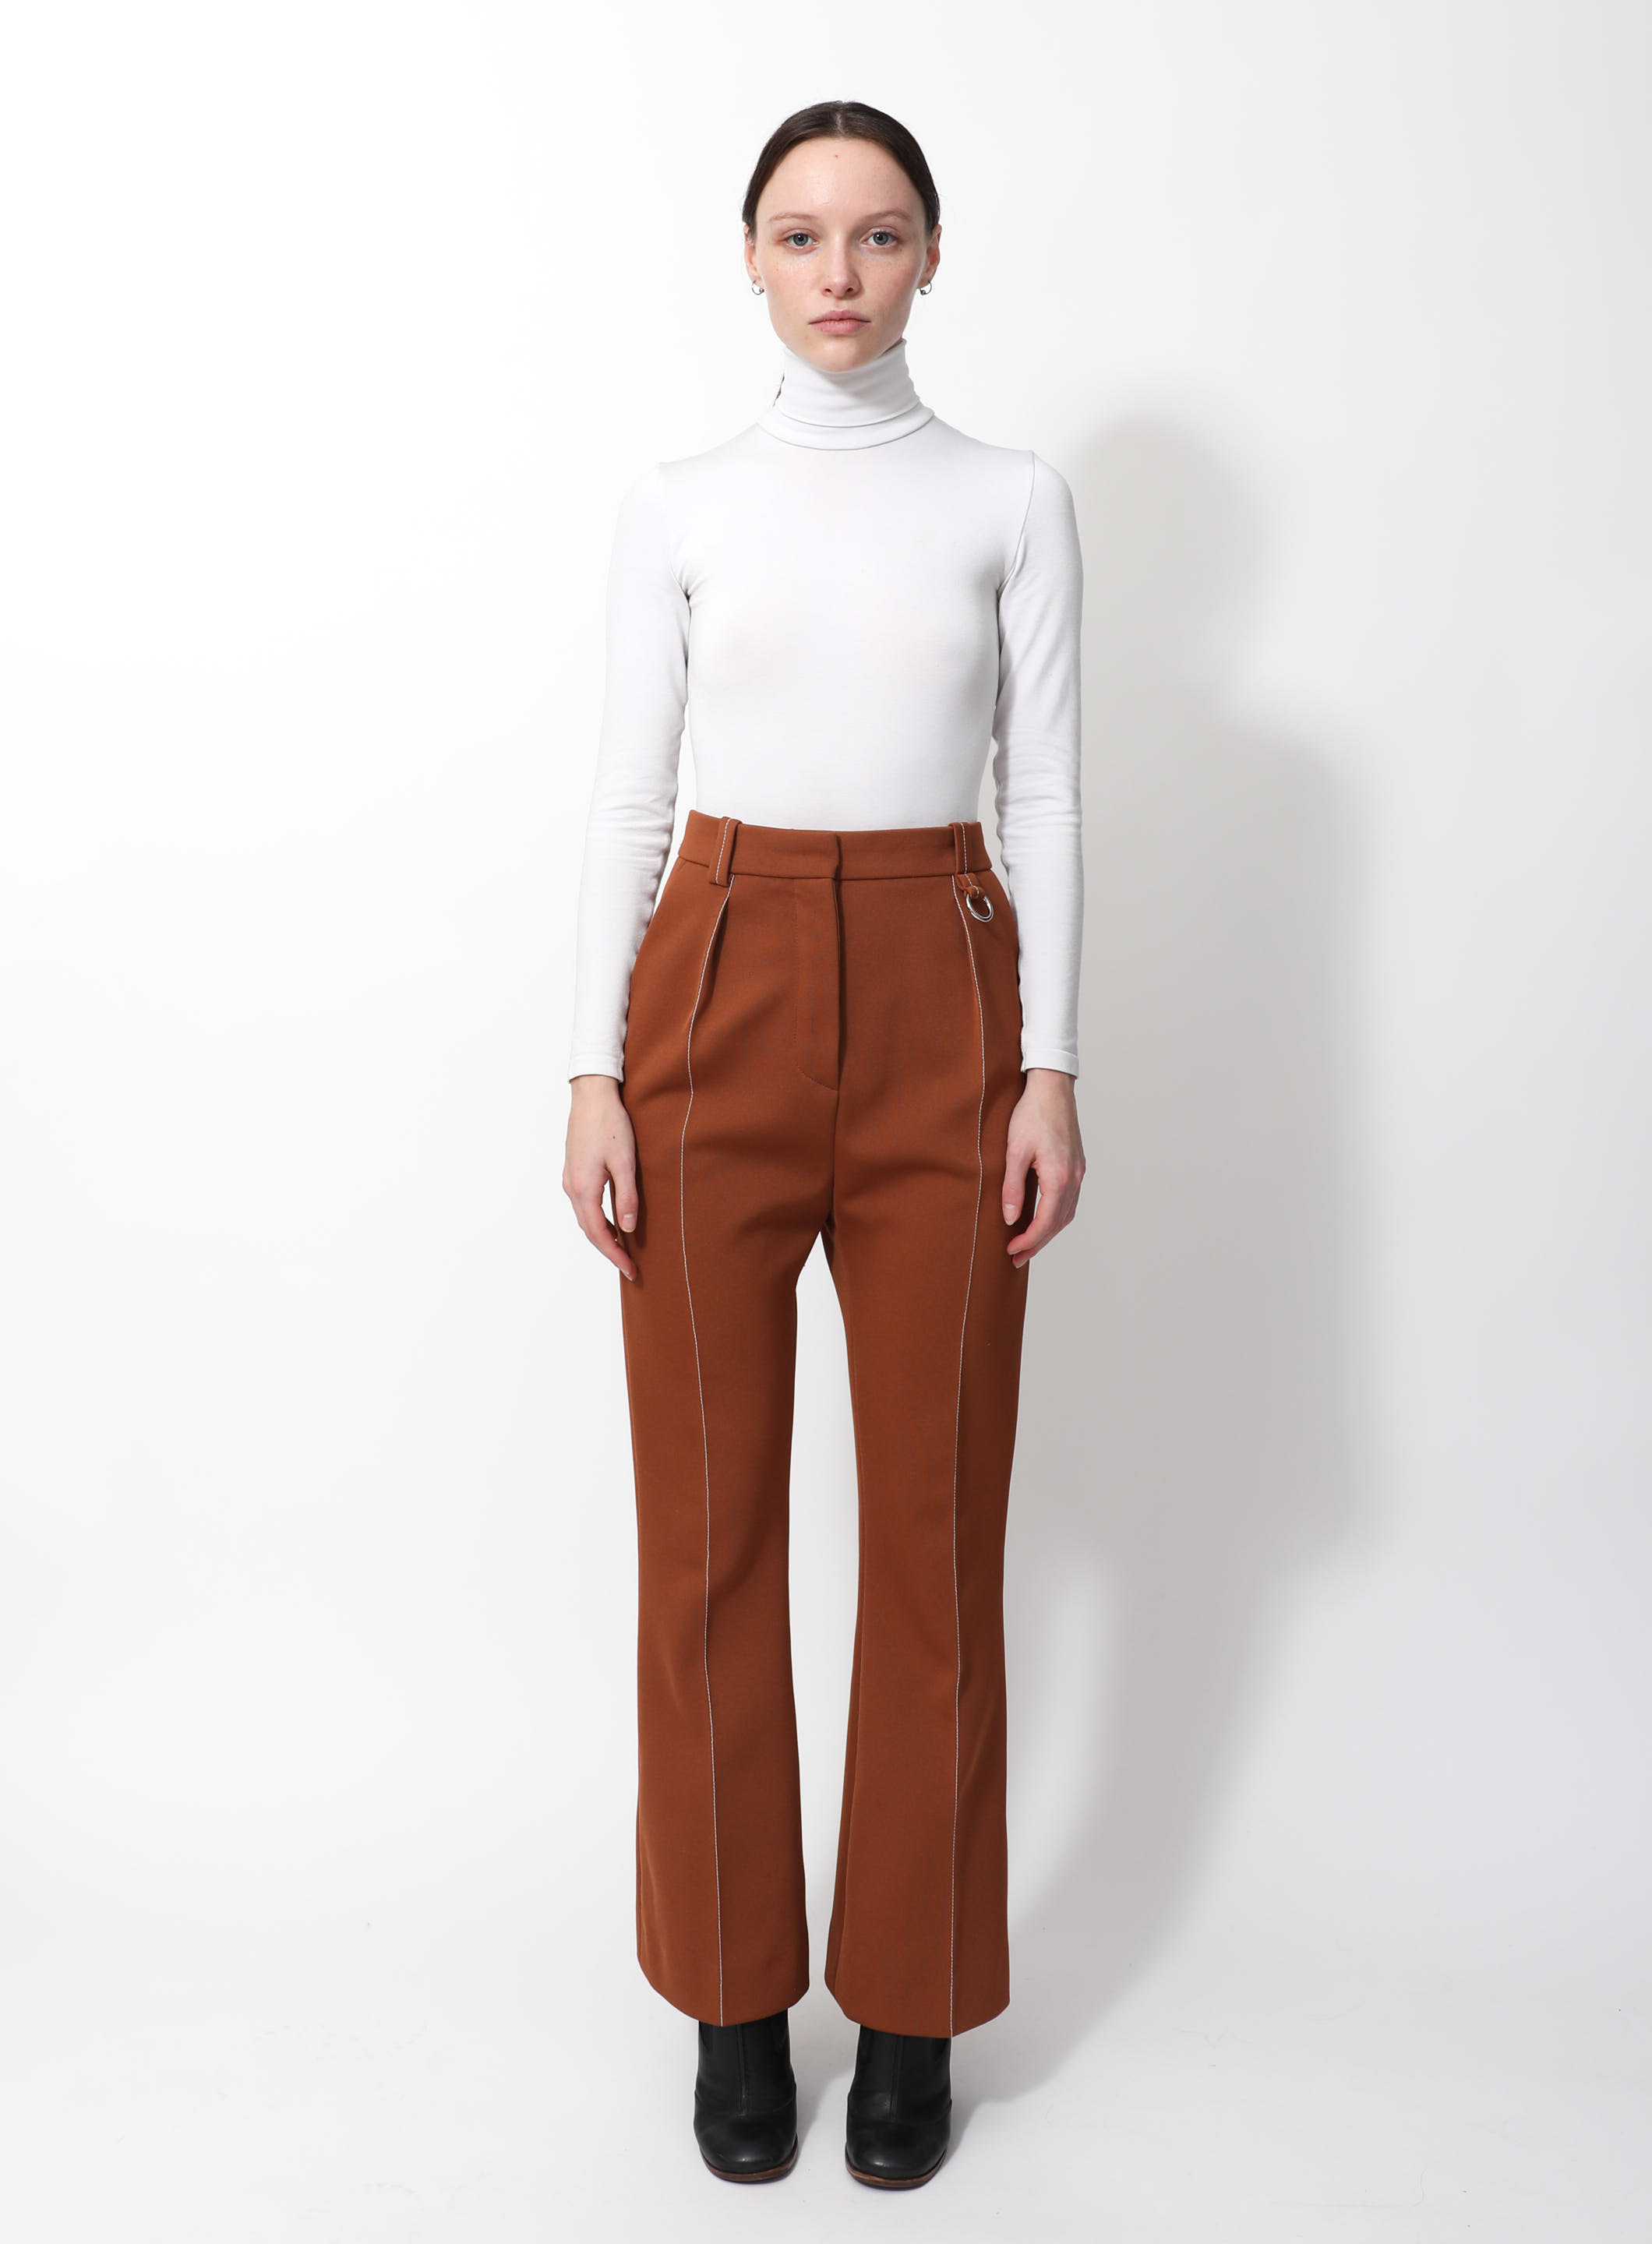 Chloe vintage brown velvet trouser /pants in 36Fr